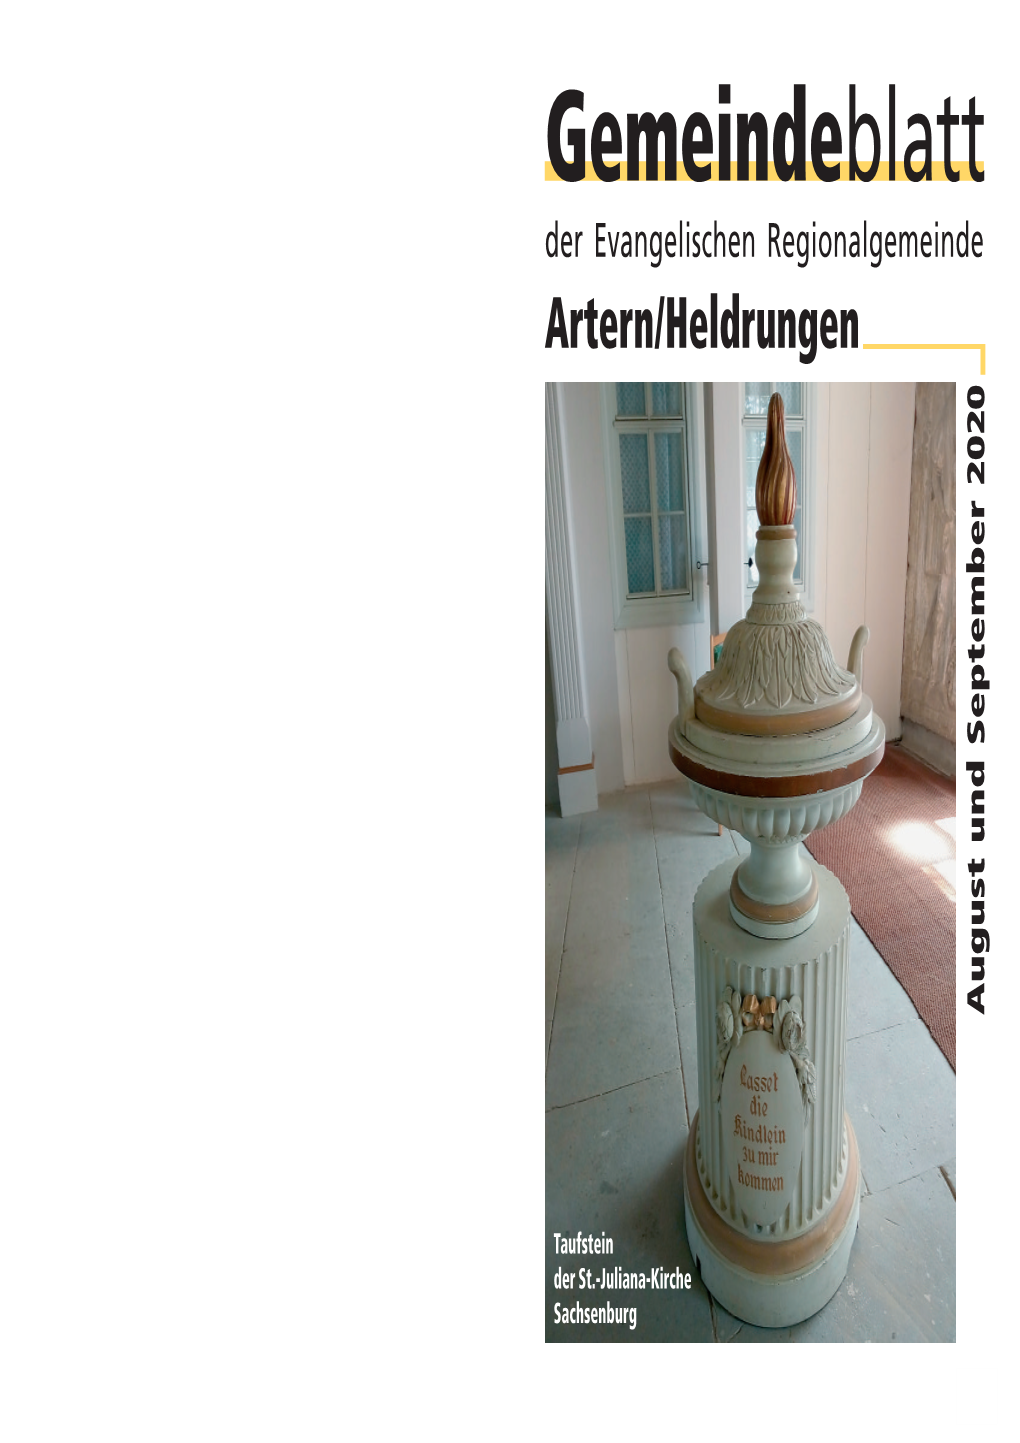 Gemeindeblatt 2020 08-09.Pmd